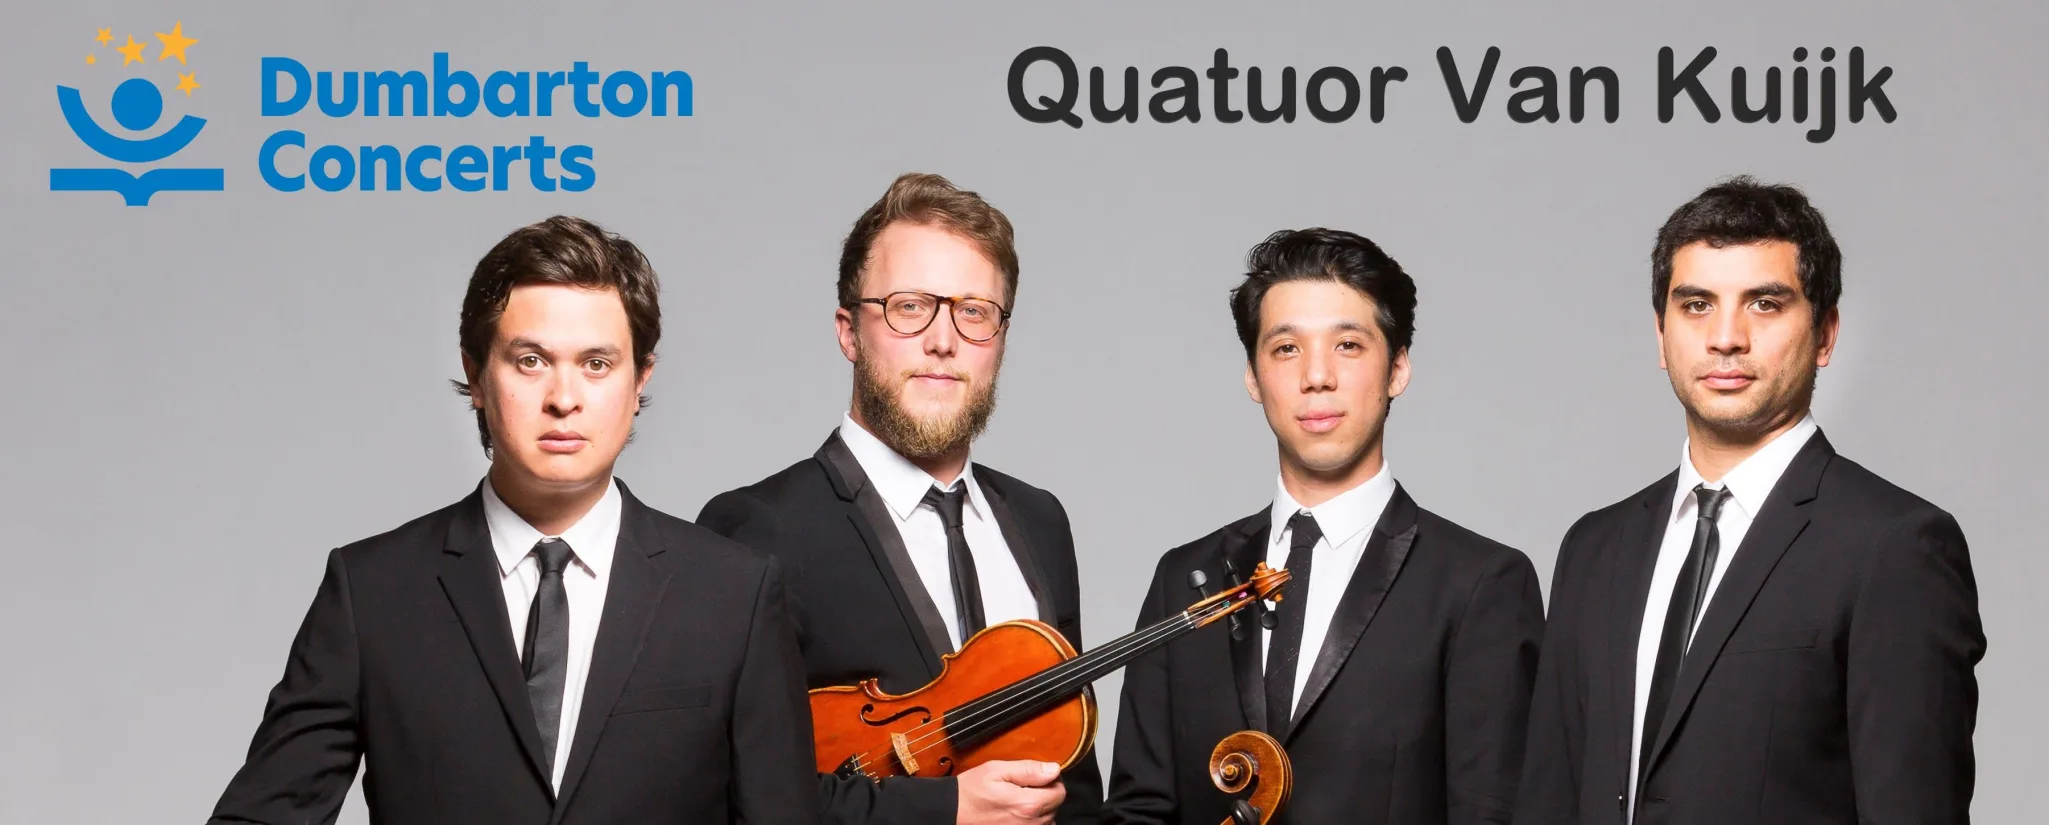 Quatuor van Kuijk